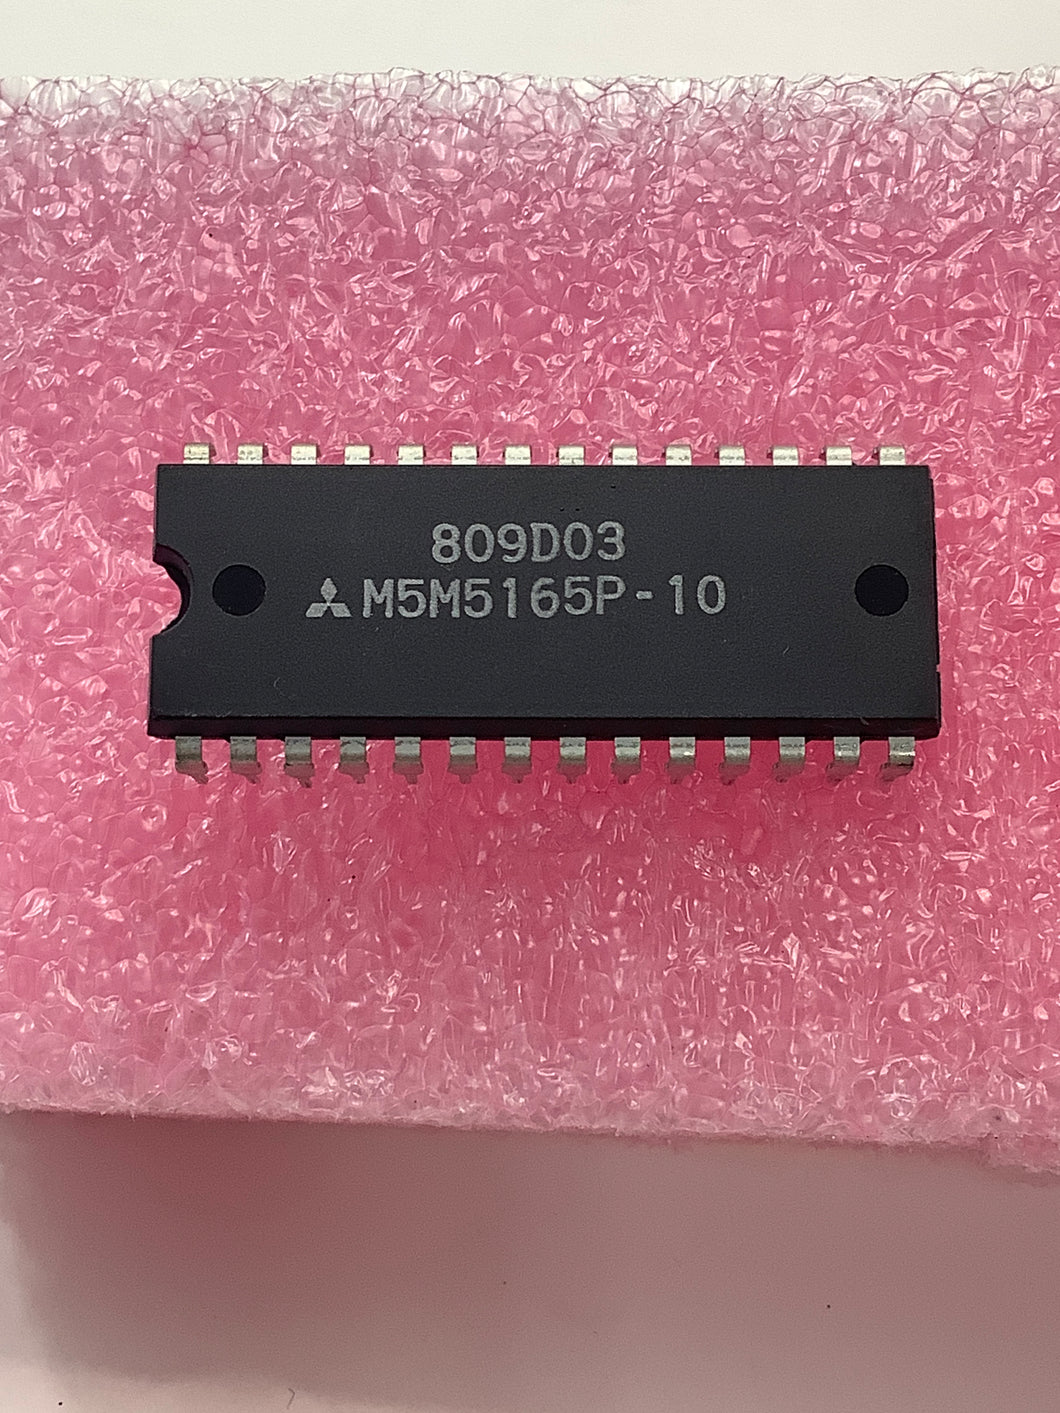 M5M5165P-10 - MITSUBISHI - 65536-BIT (8192-WORD BY 8-BIT) CMOS STATIC RAM.